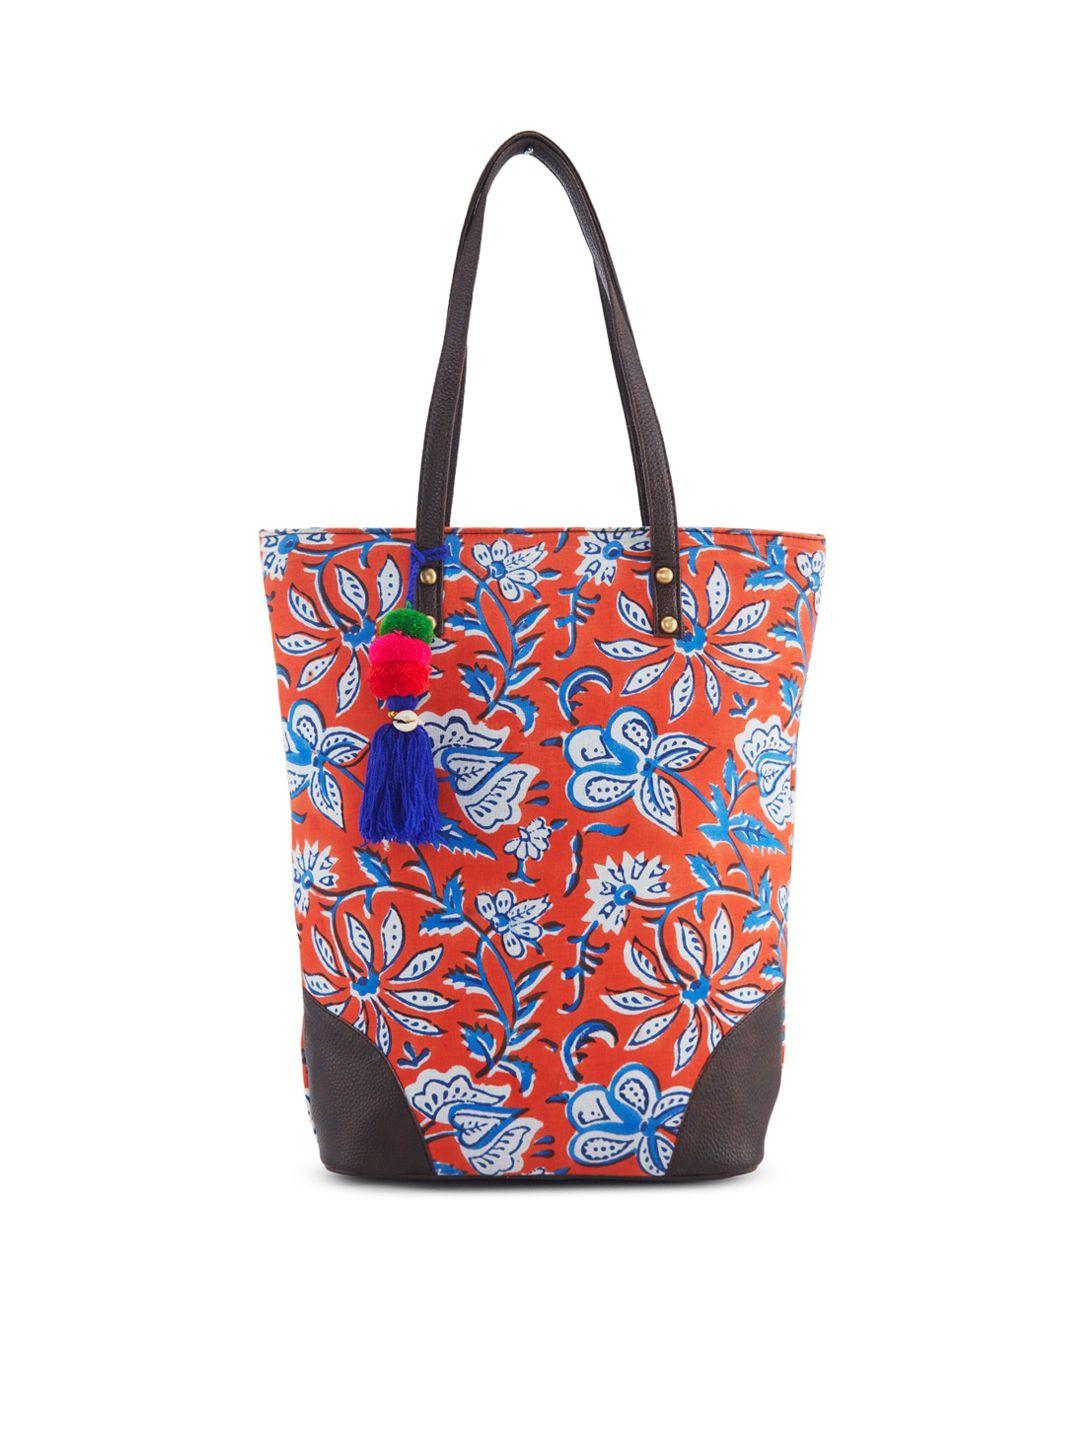 nepri floral printed shopper tote bag with tasselled